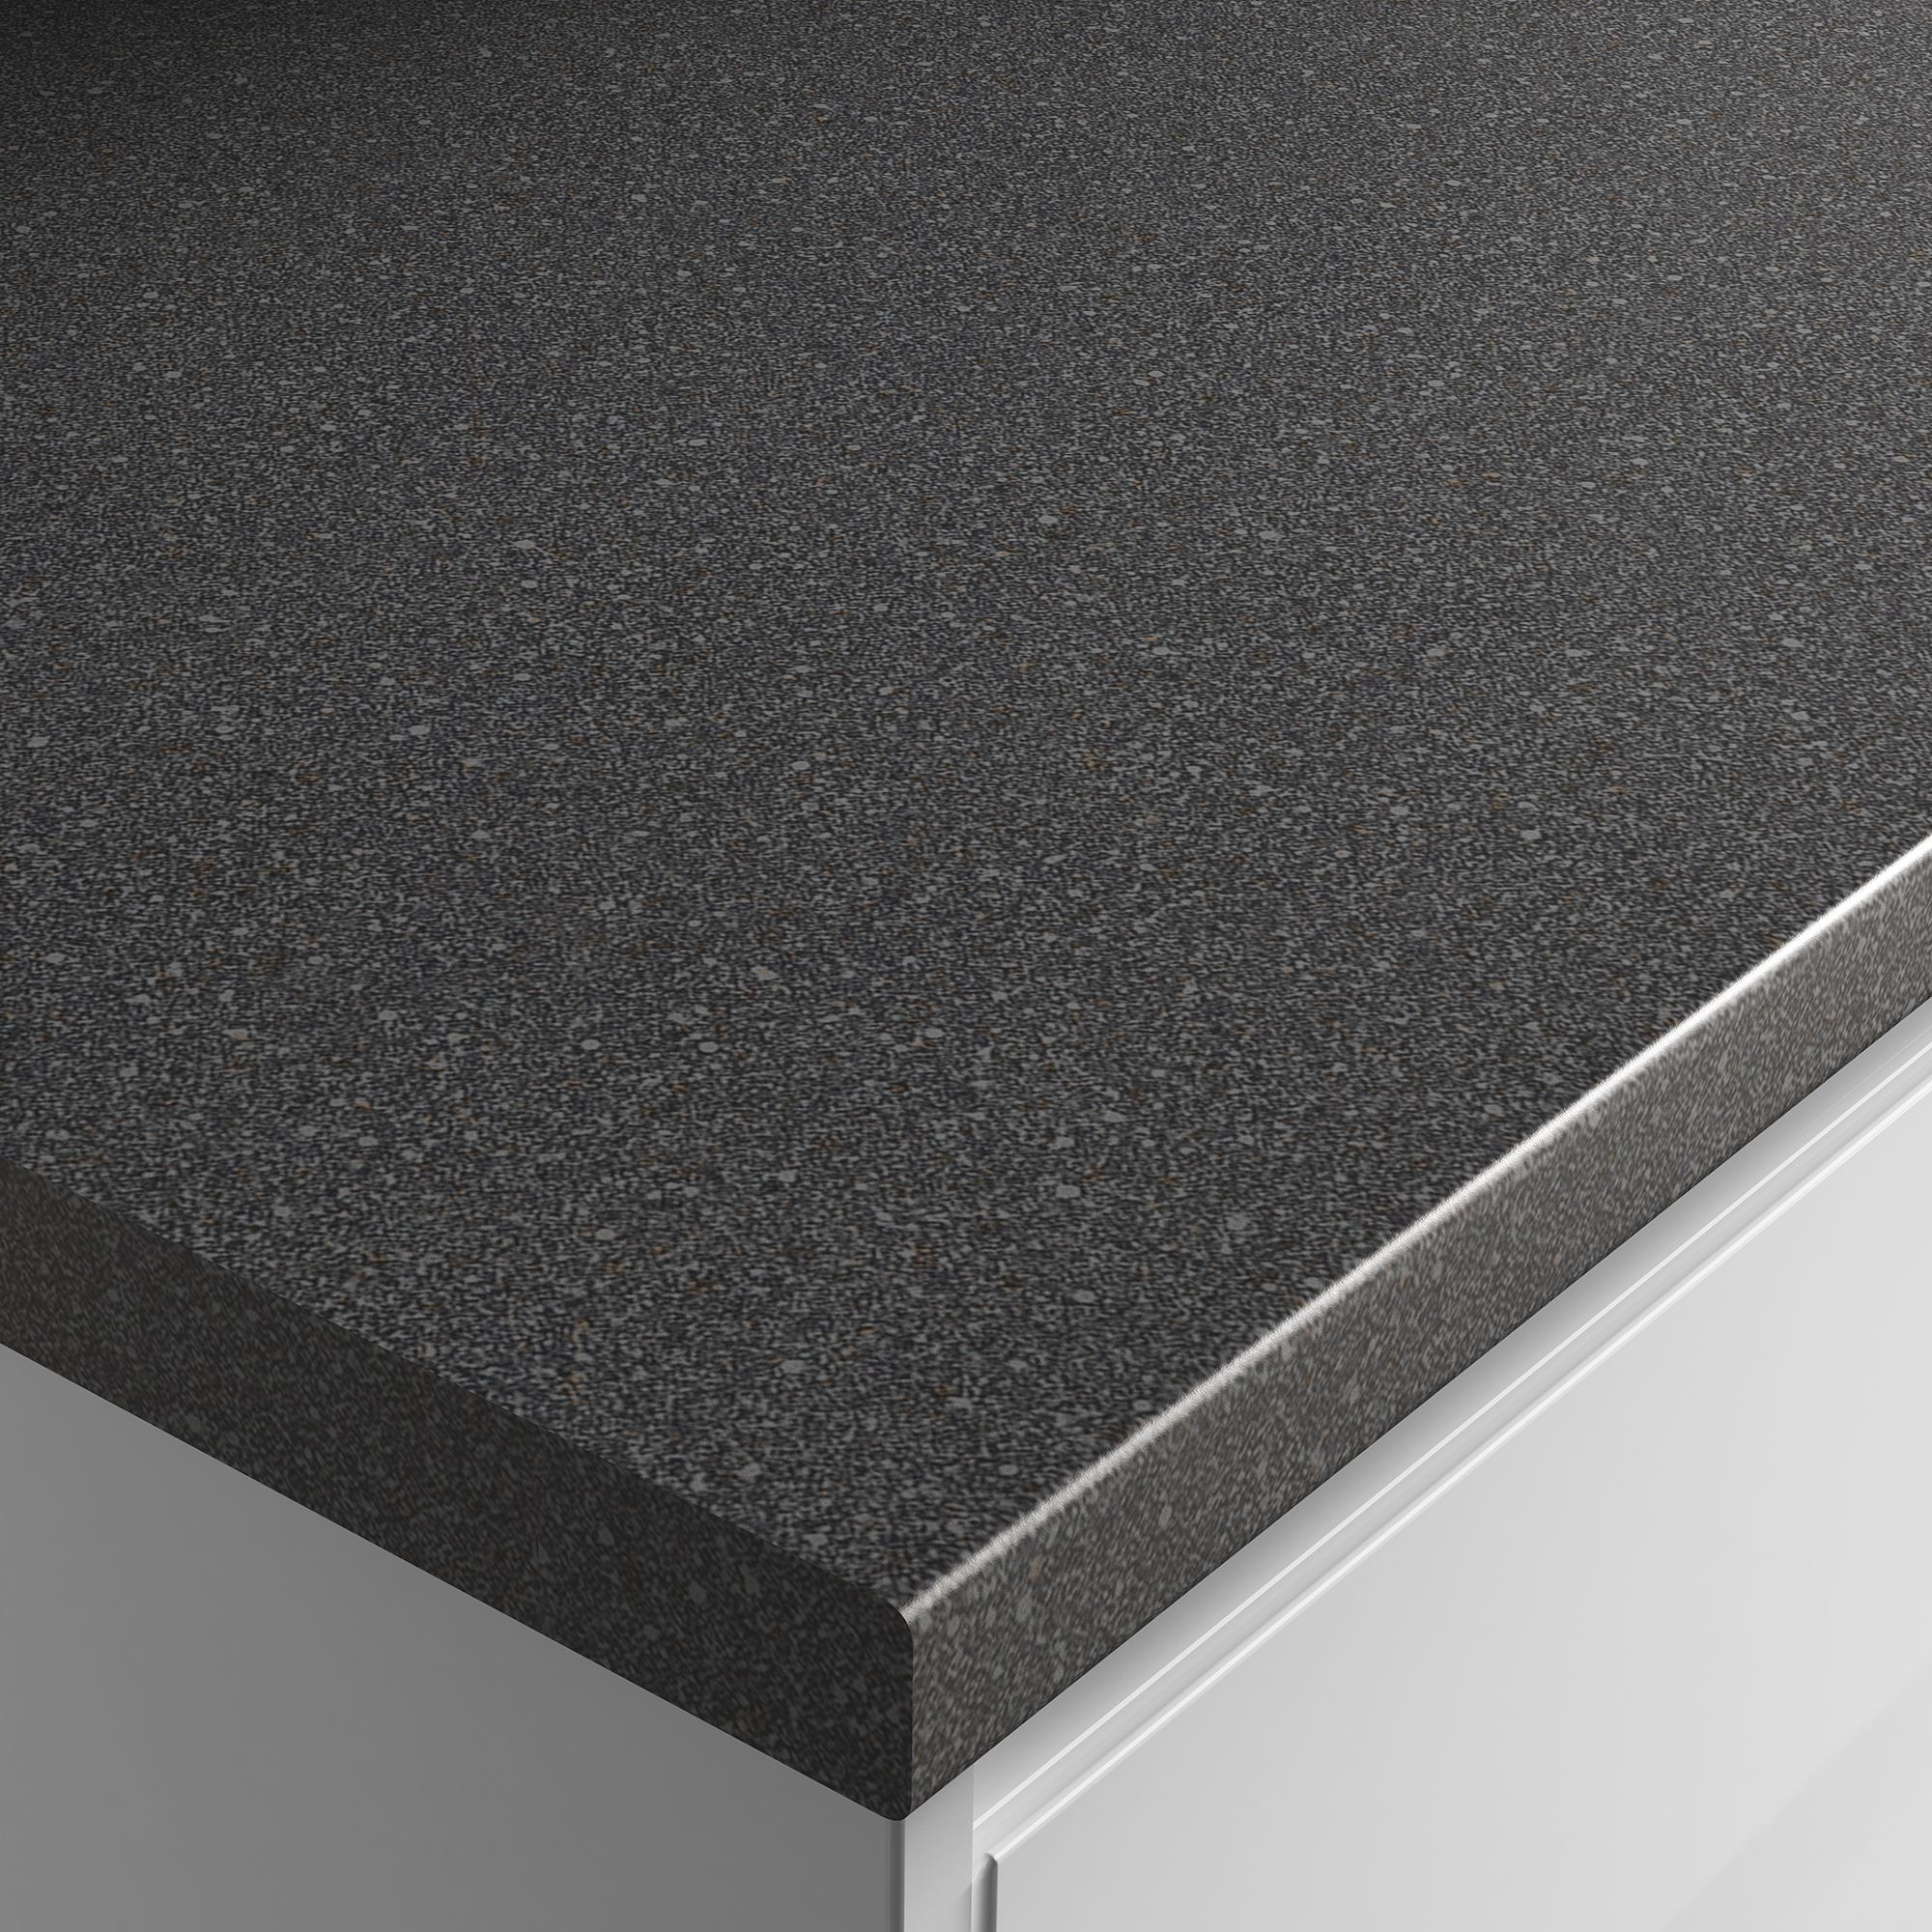 Image of Noir Granite Laminate Worktop - 600mm x 38mm x 3m